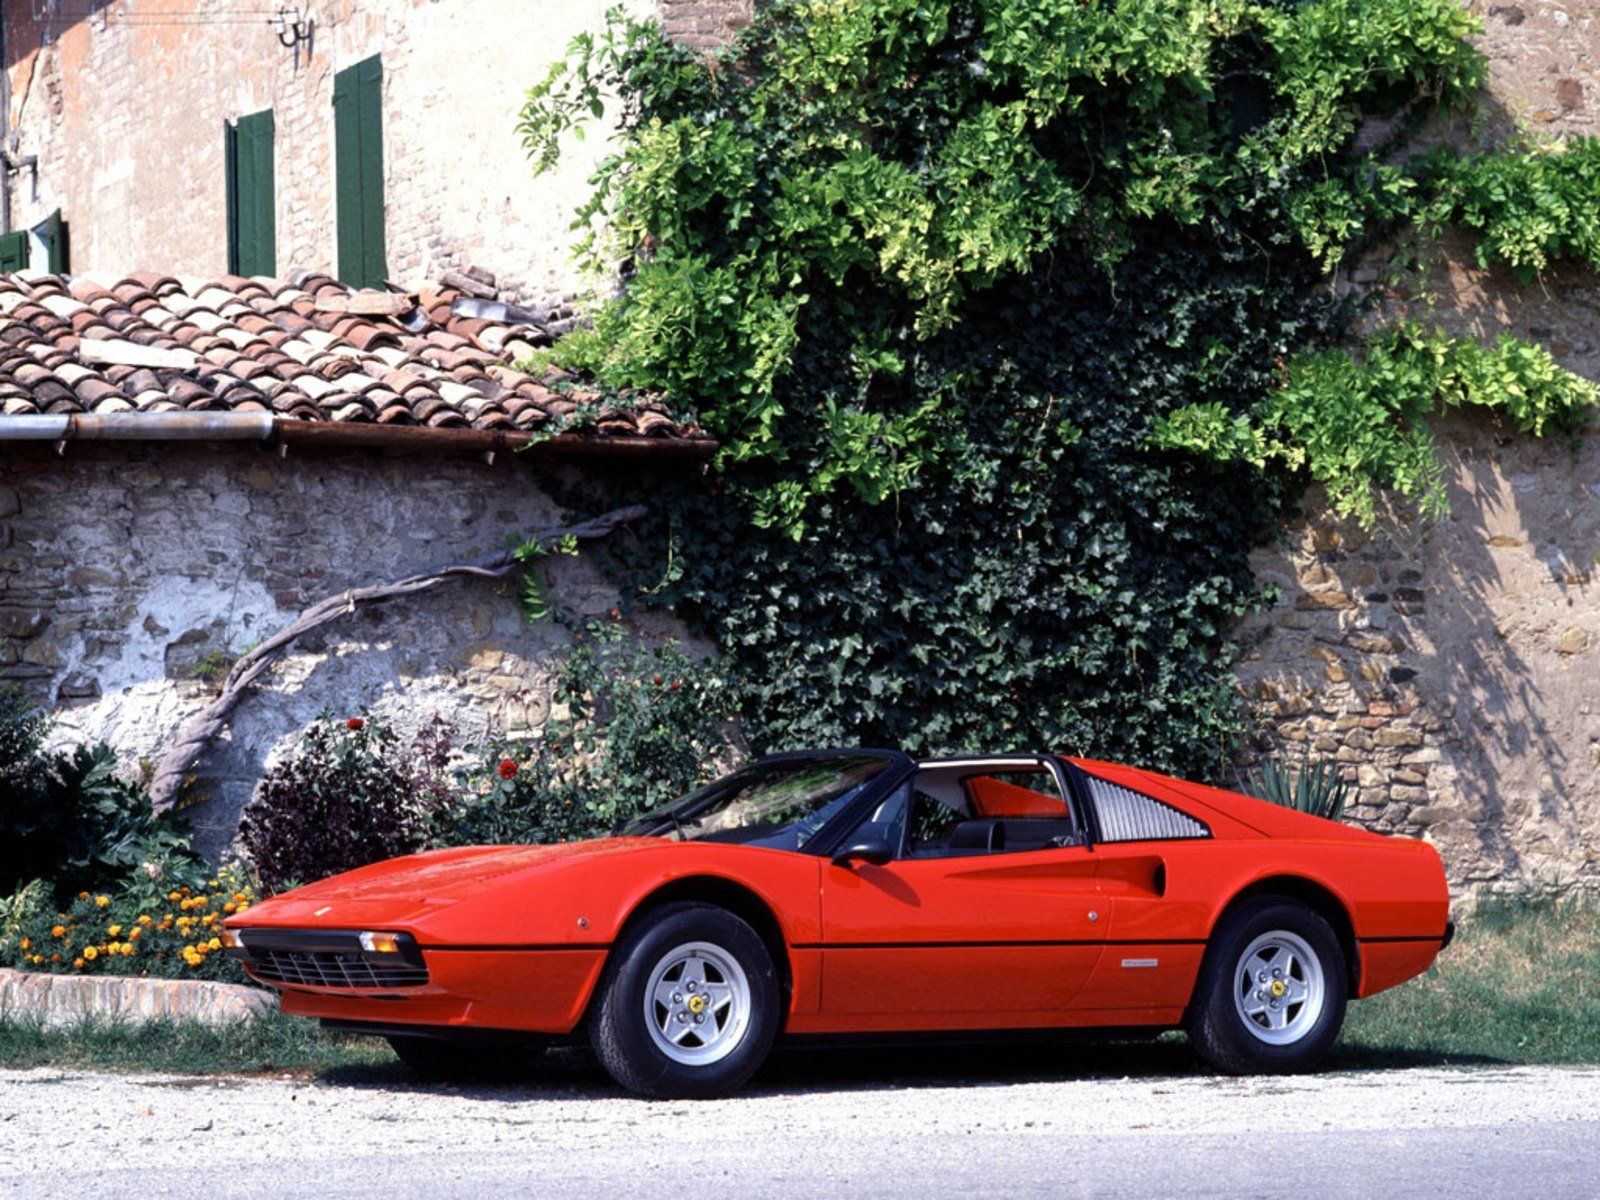 Ferrari 308. Ferrari 308 GTS 1980. Ferrari 308 GTB 1980. Ferrari 308 GTS 1977. Ferrari 308 GTS 1977 – 1980.